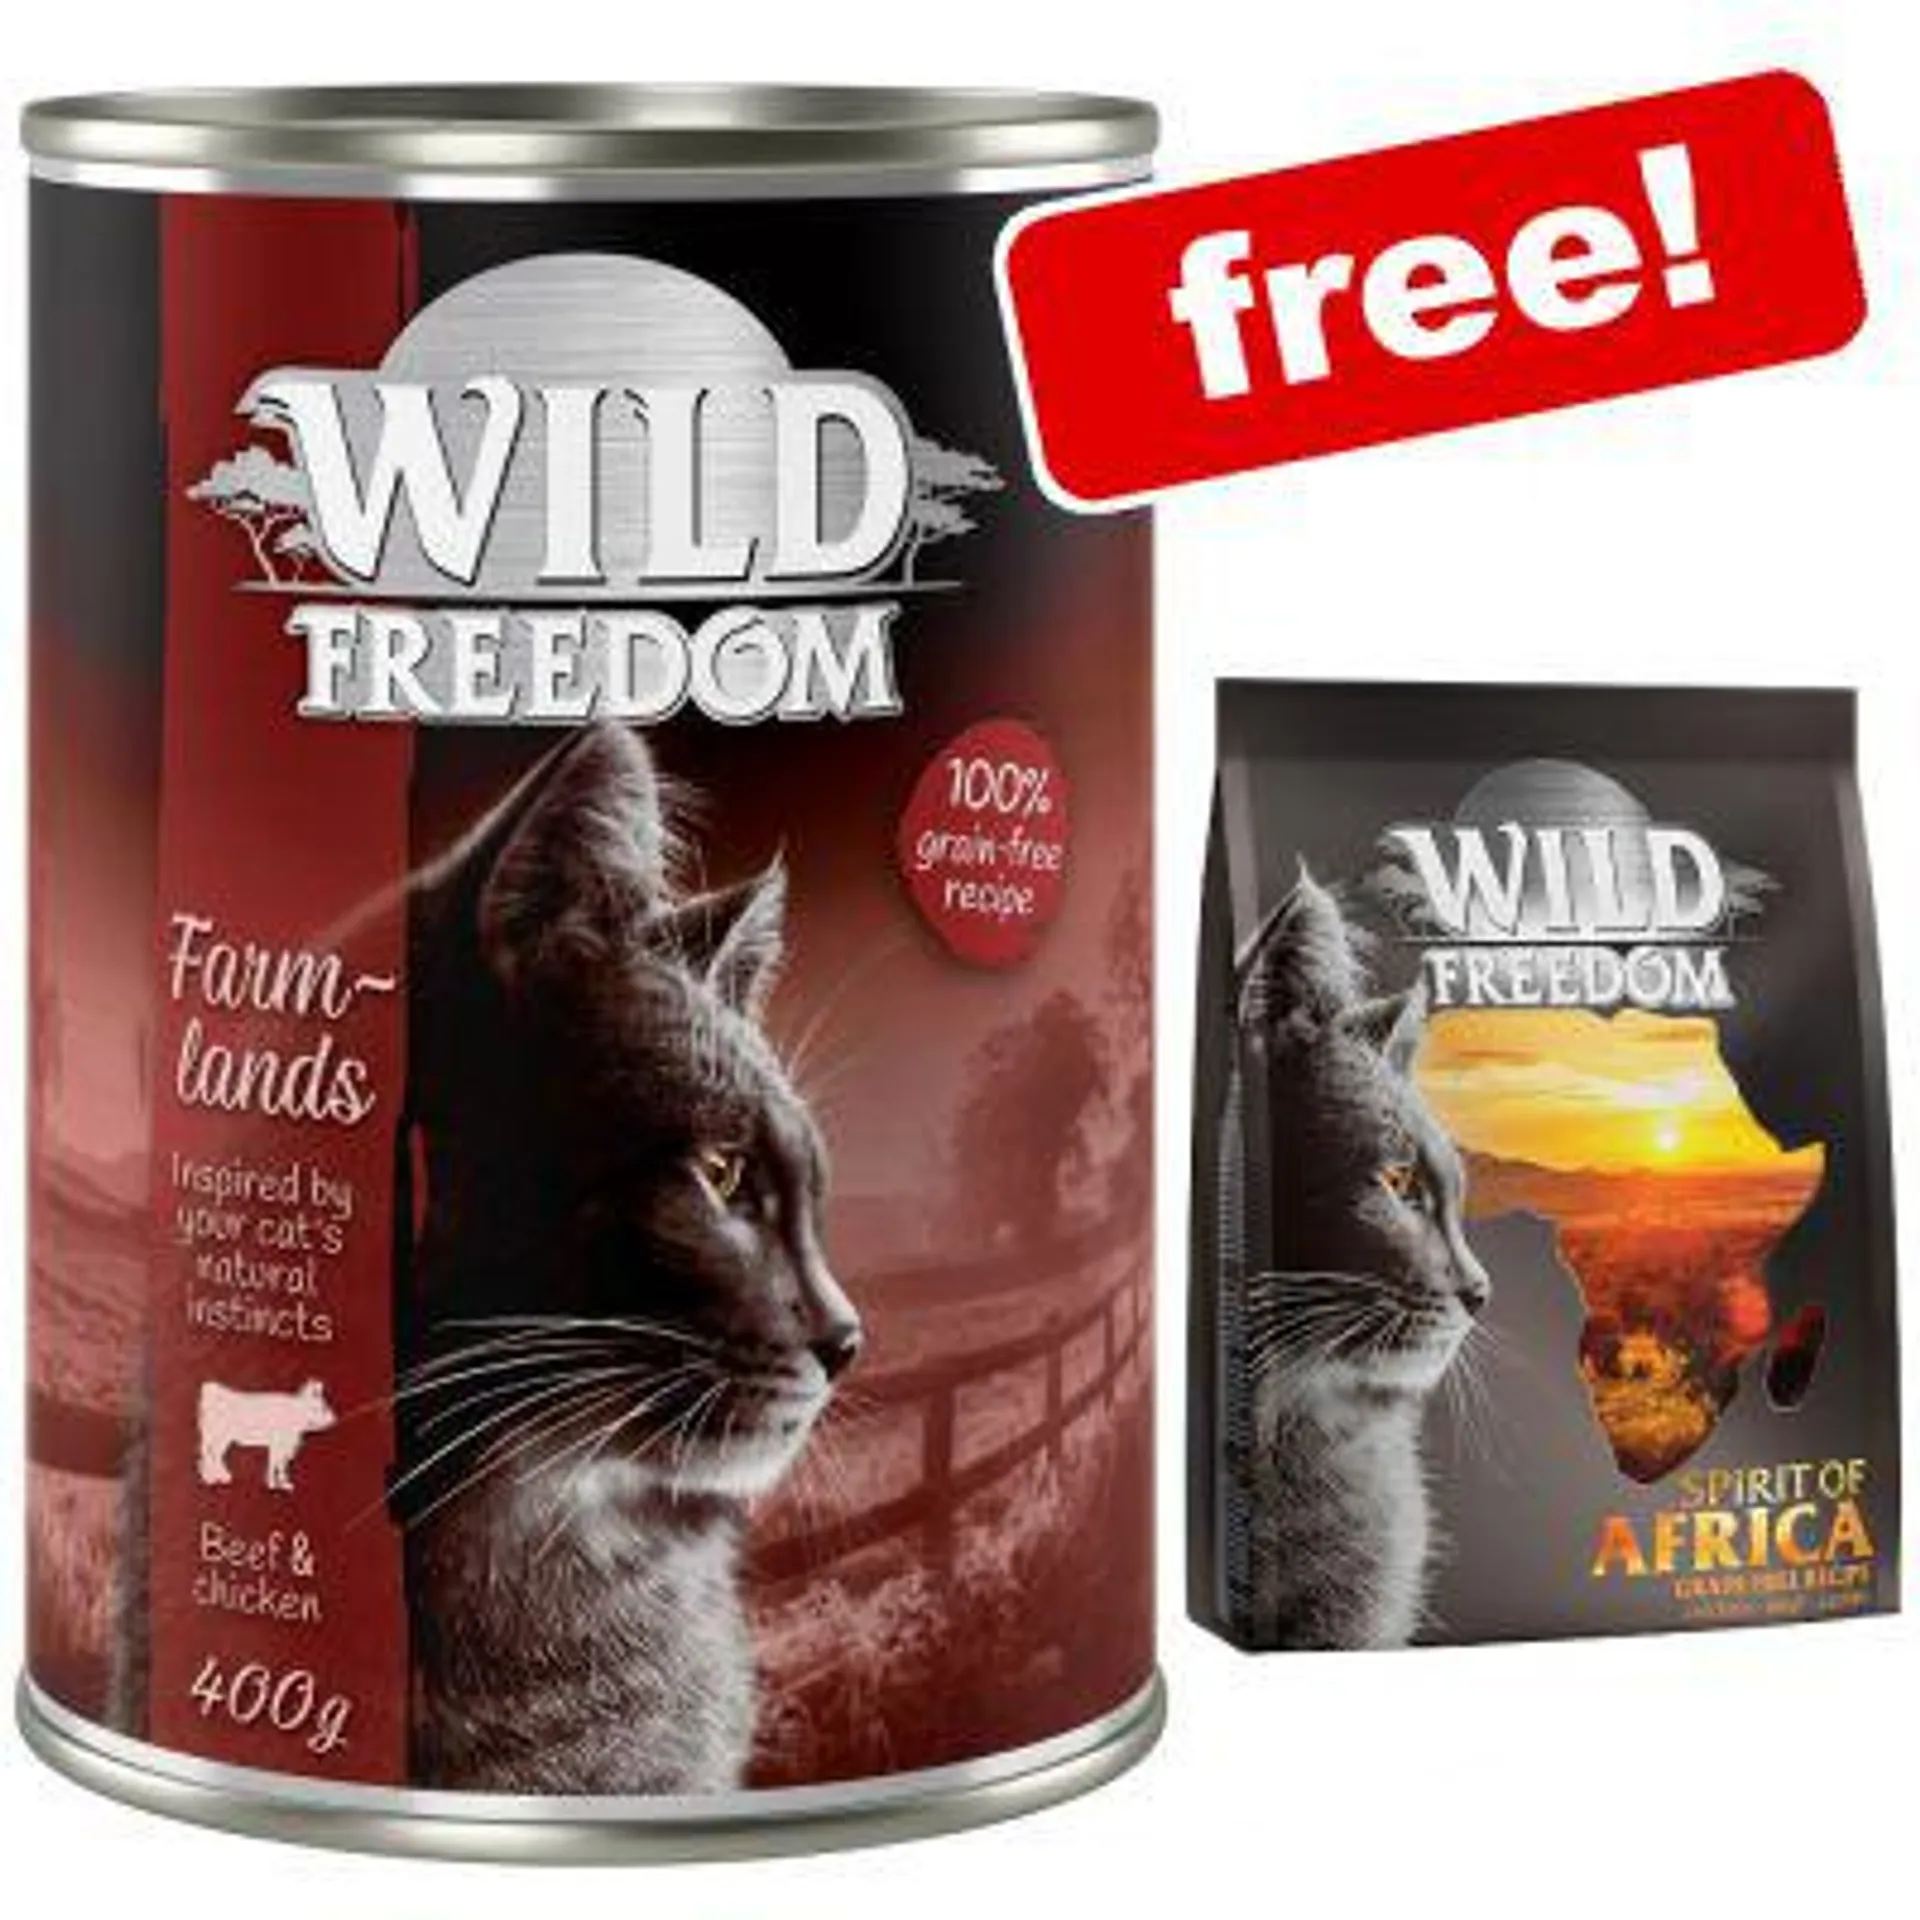 24 x 400g Wild Freedom Wet Cat Food + 400g "Spirit of Africa" Dry Food Free!*